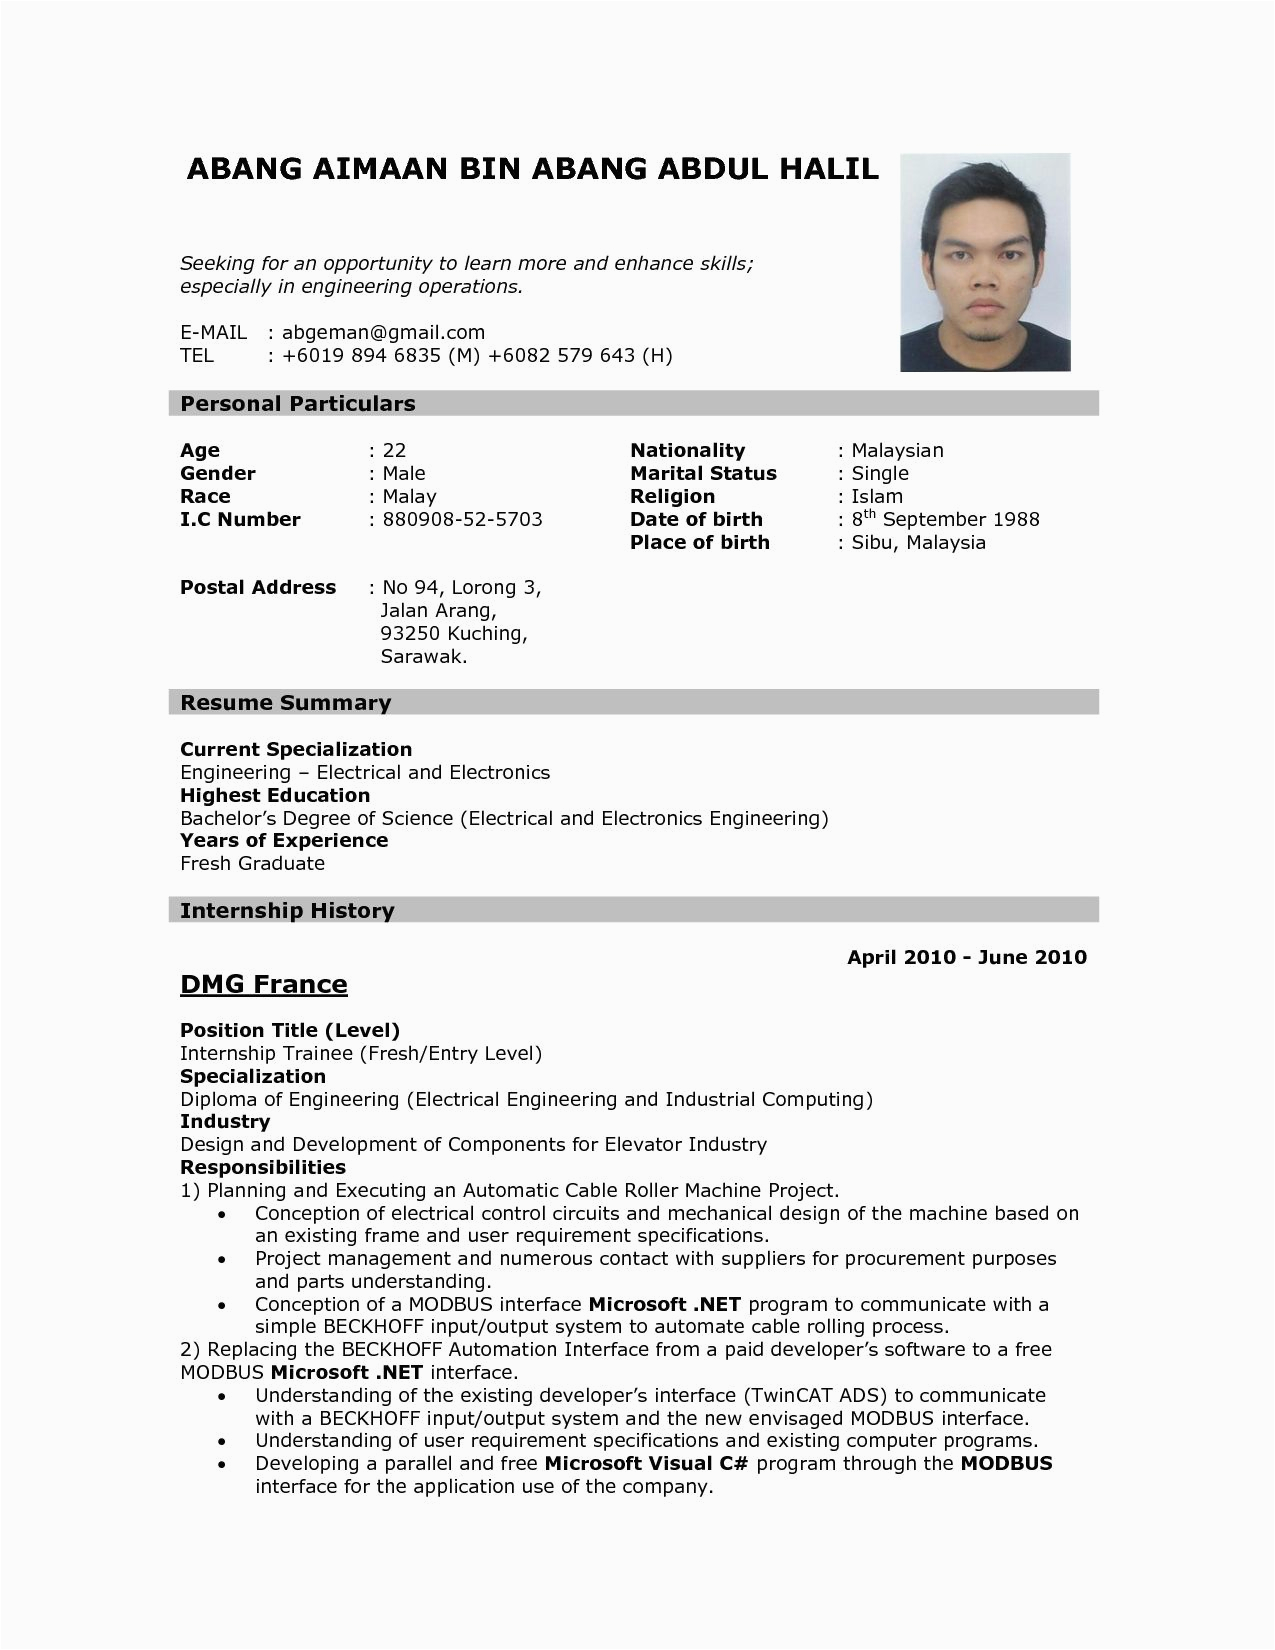 Resume for Online Job Application Sample format Resume for Job Application to Download Data